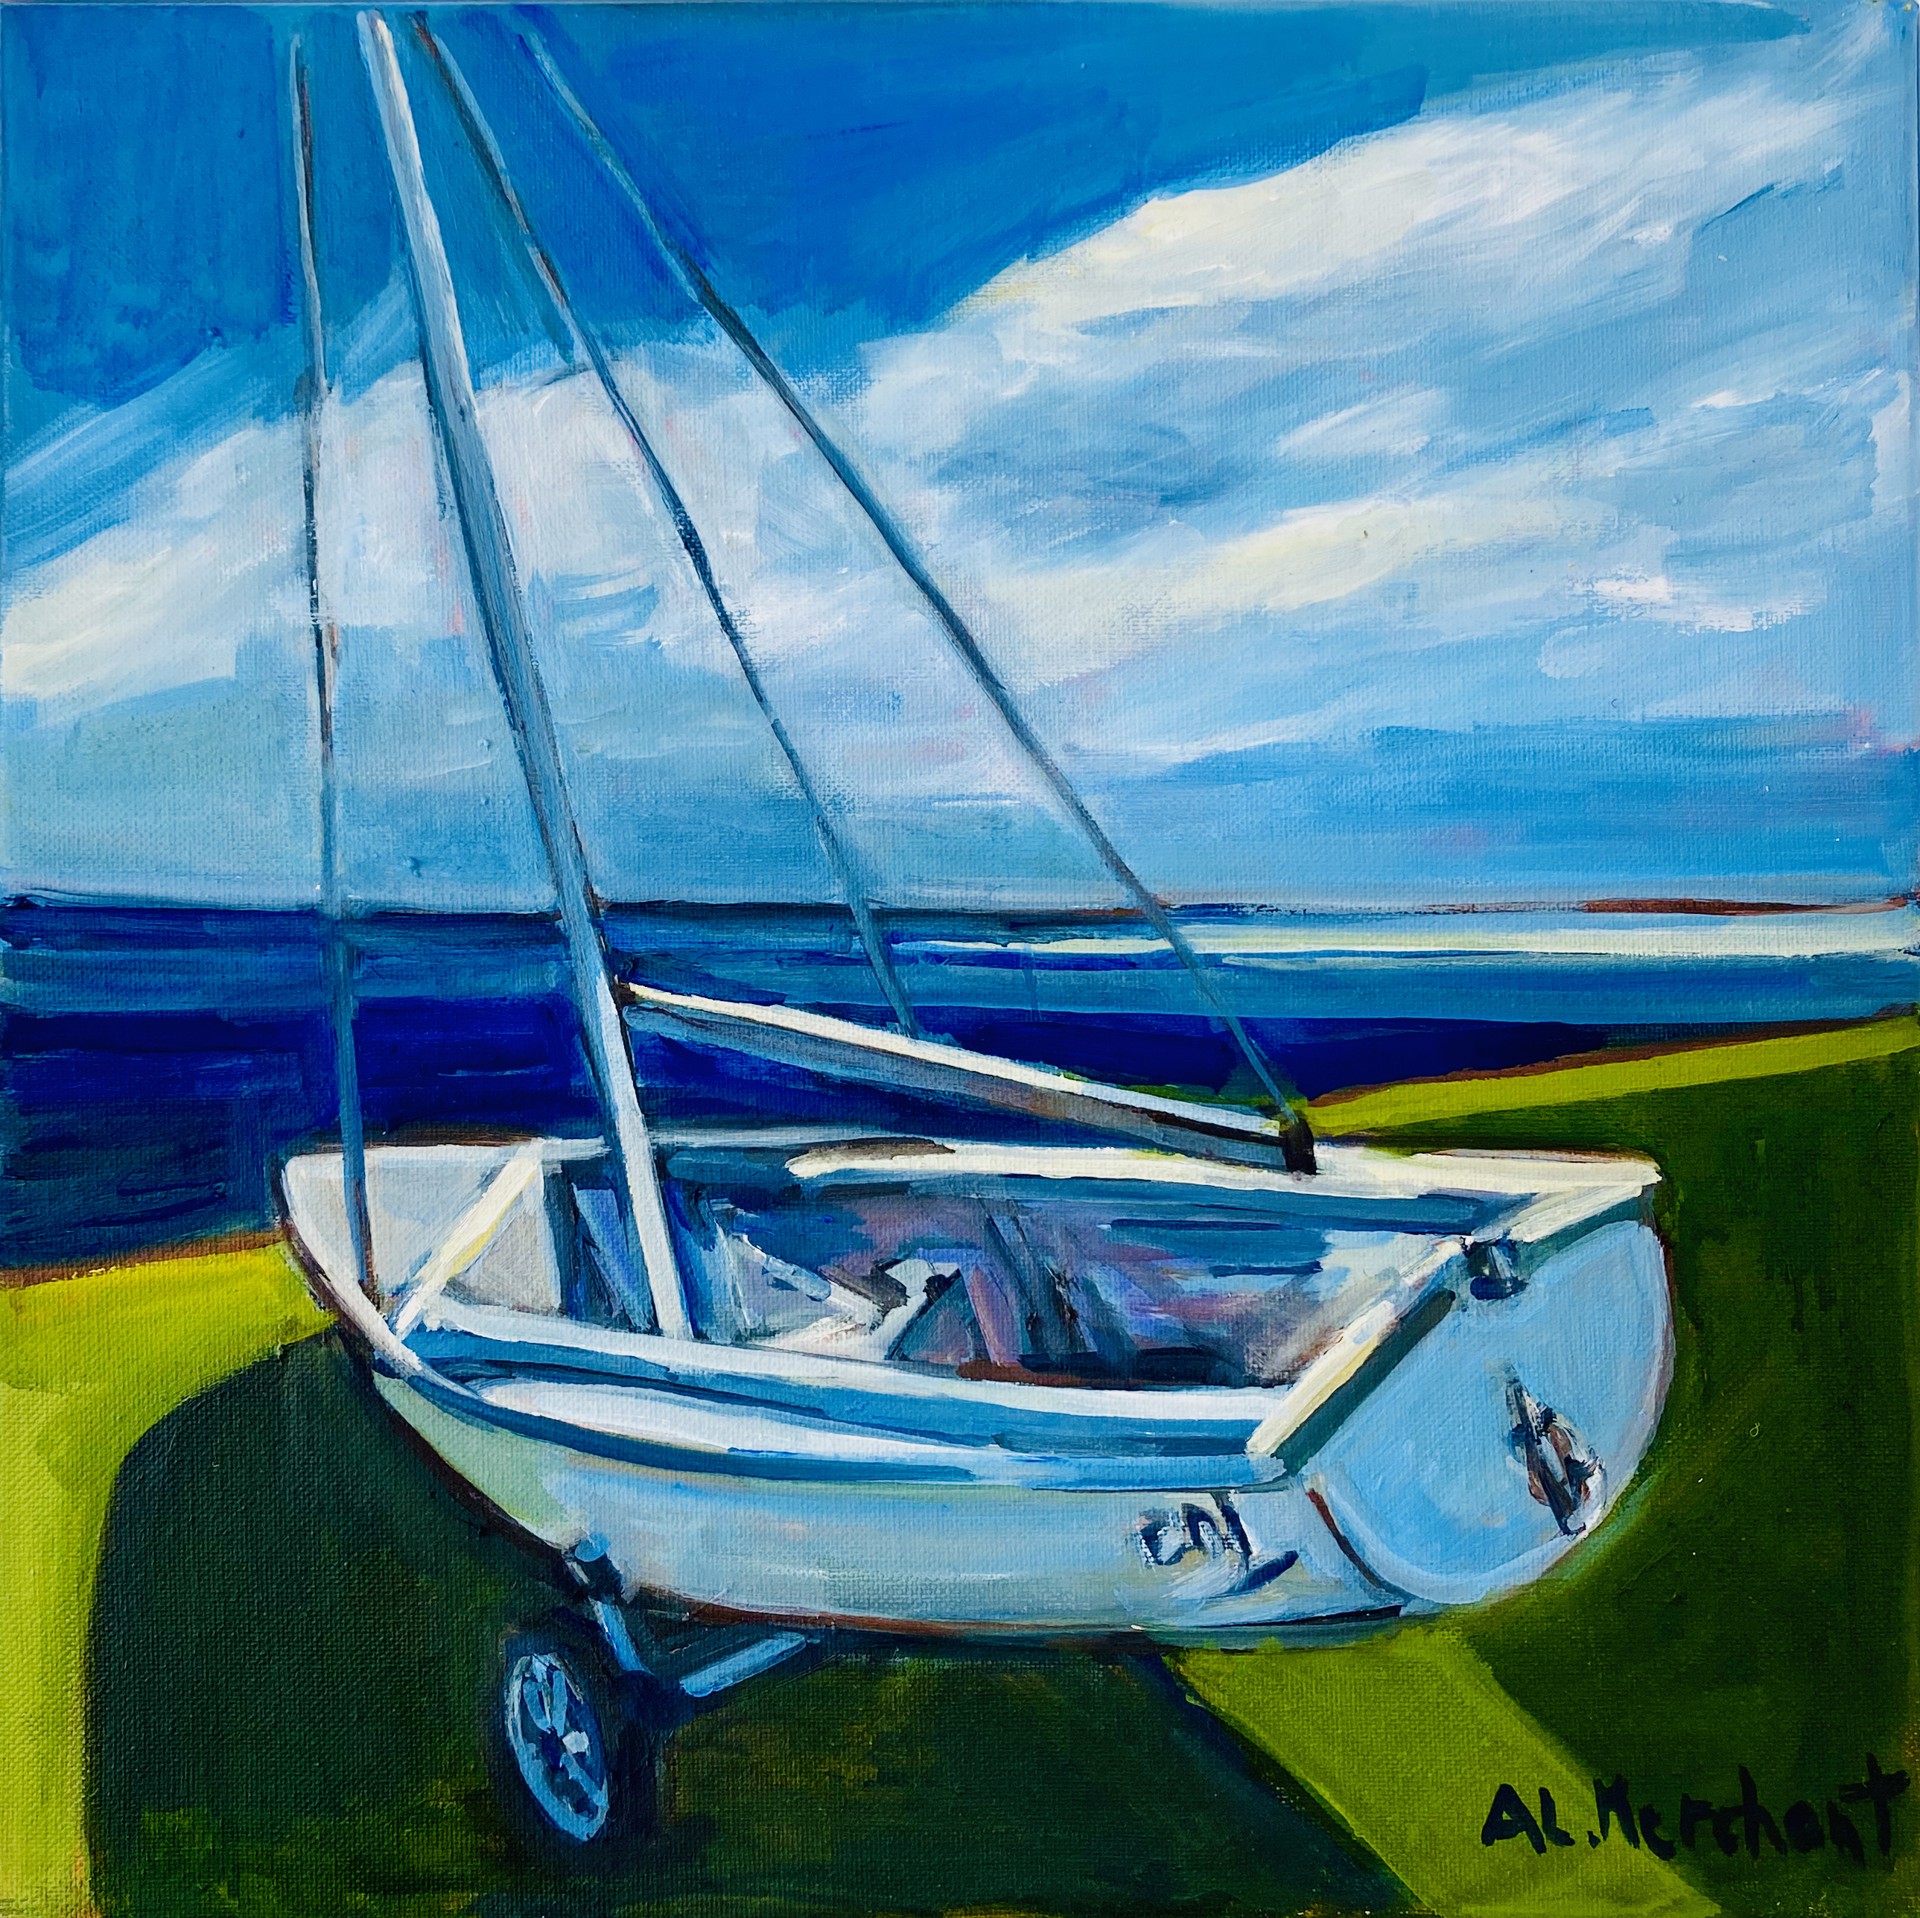 Soon to Sail by Anne-Lise Merchant